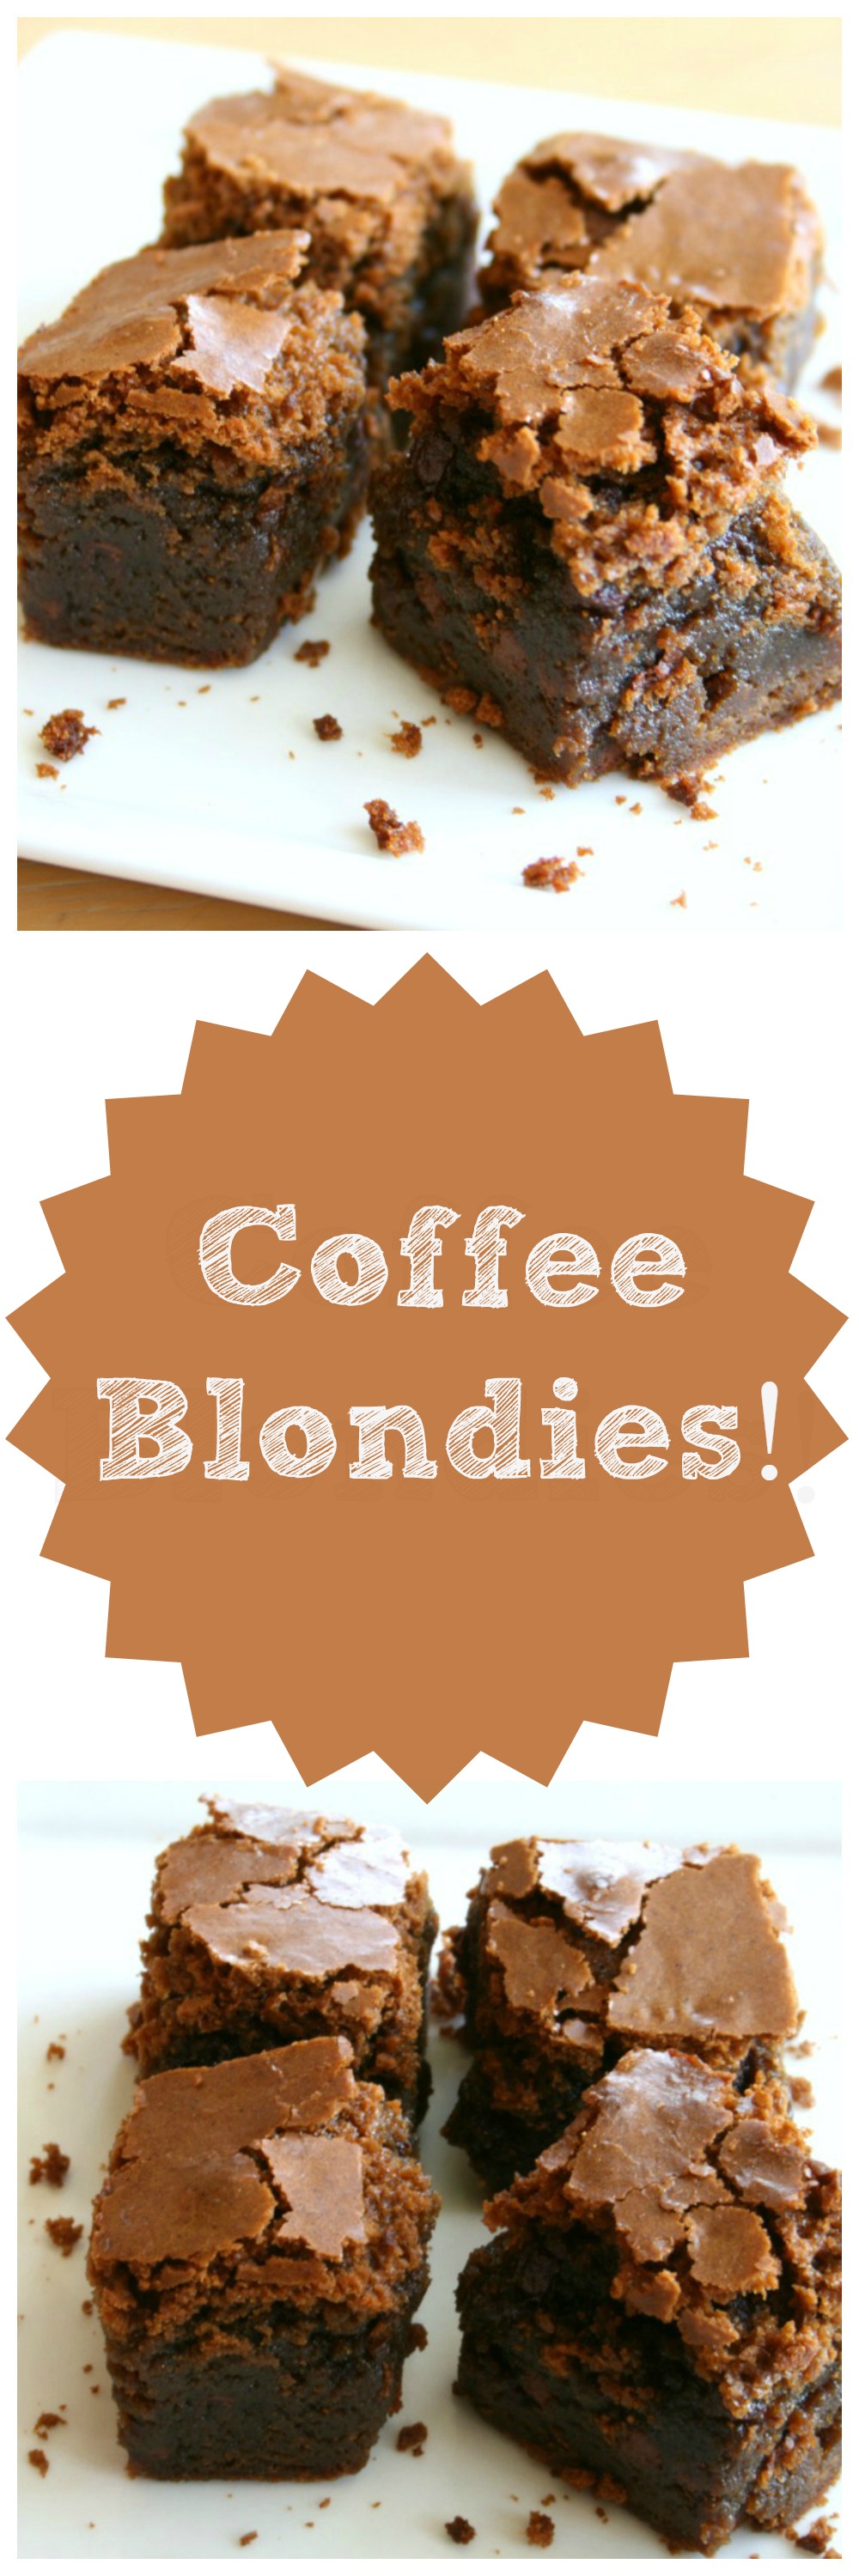 Coffee Blondies photo collage on ShockinglyDelicious